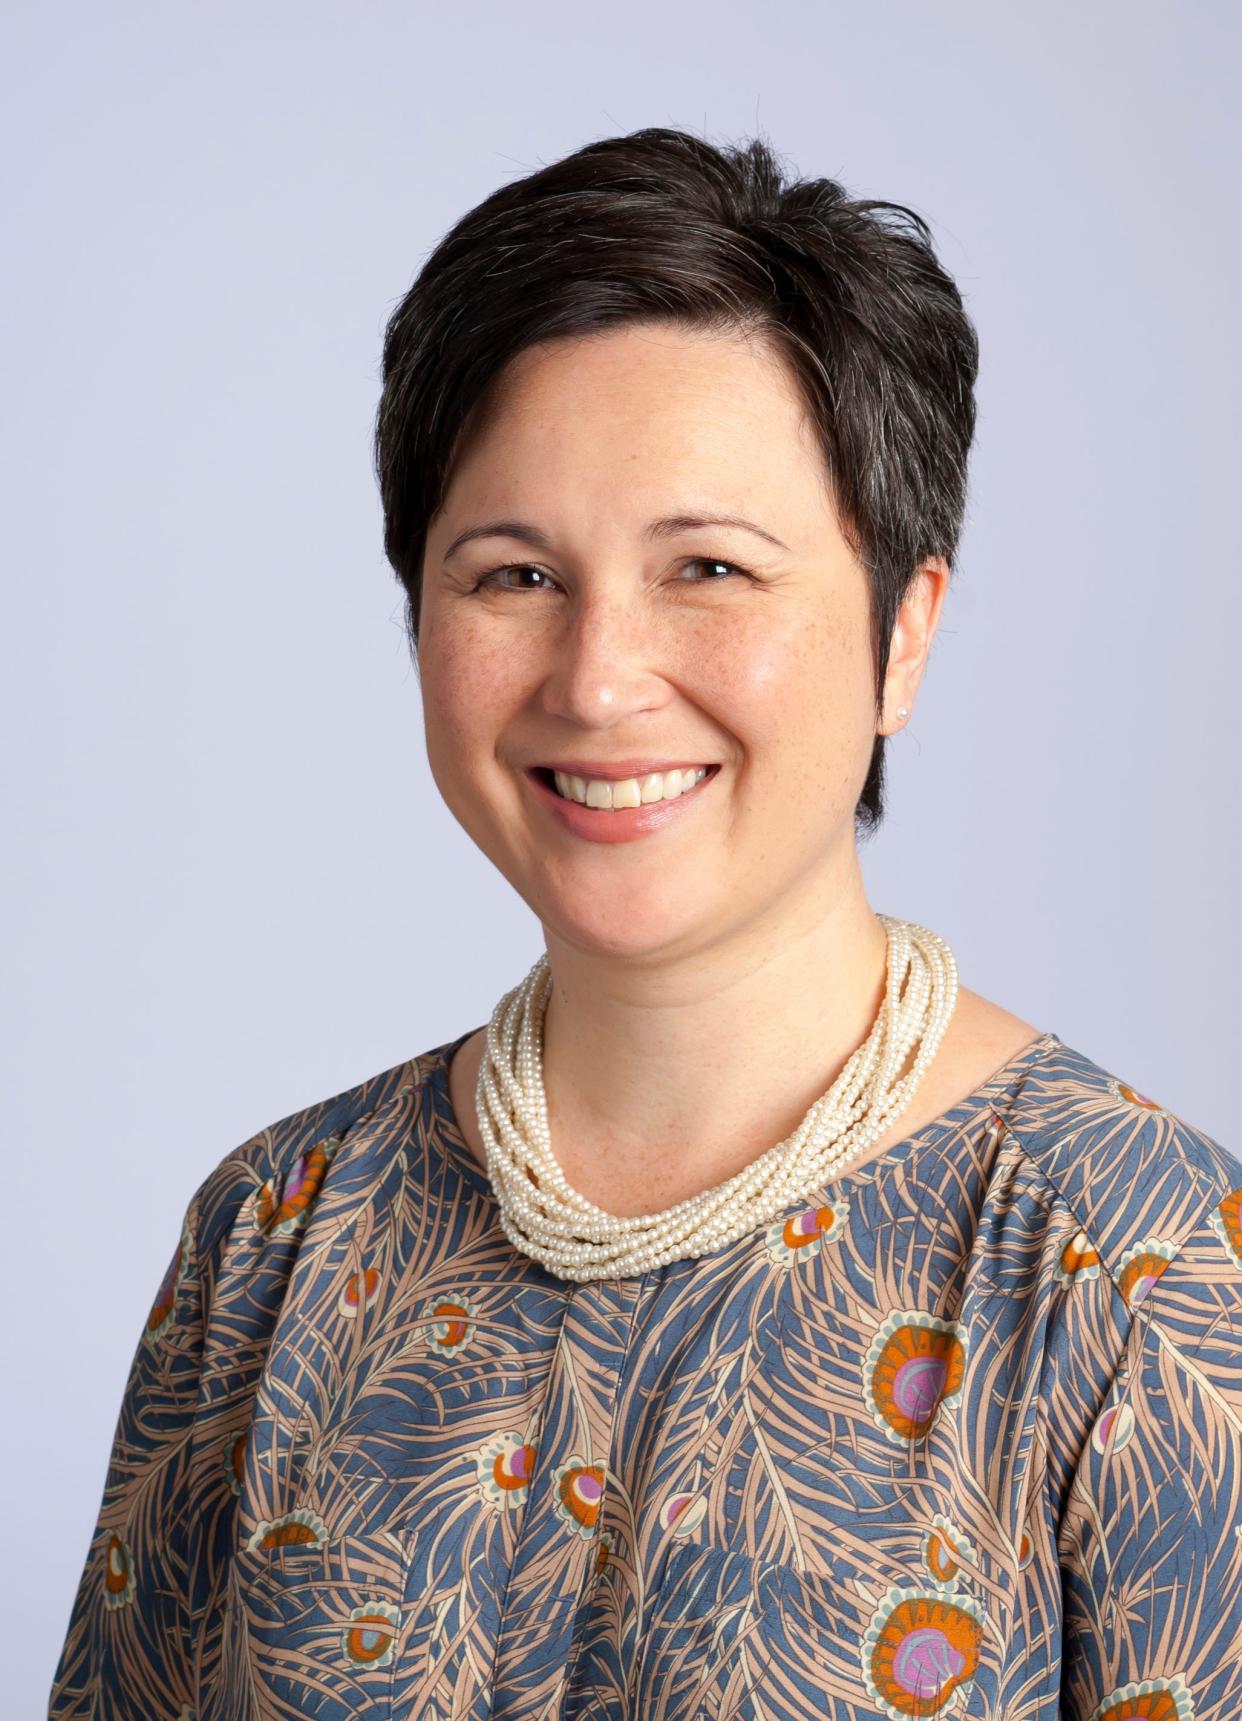 Dr. Jennifer Savitski, chair of the Women’s Network Leadership Institute at the Greater Akron Chamber